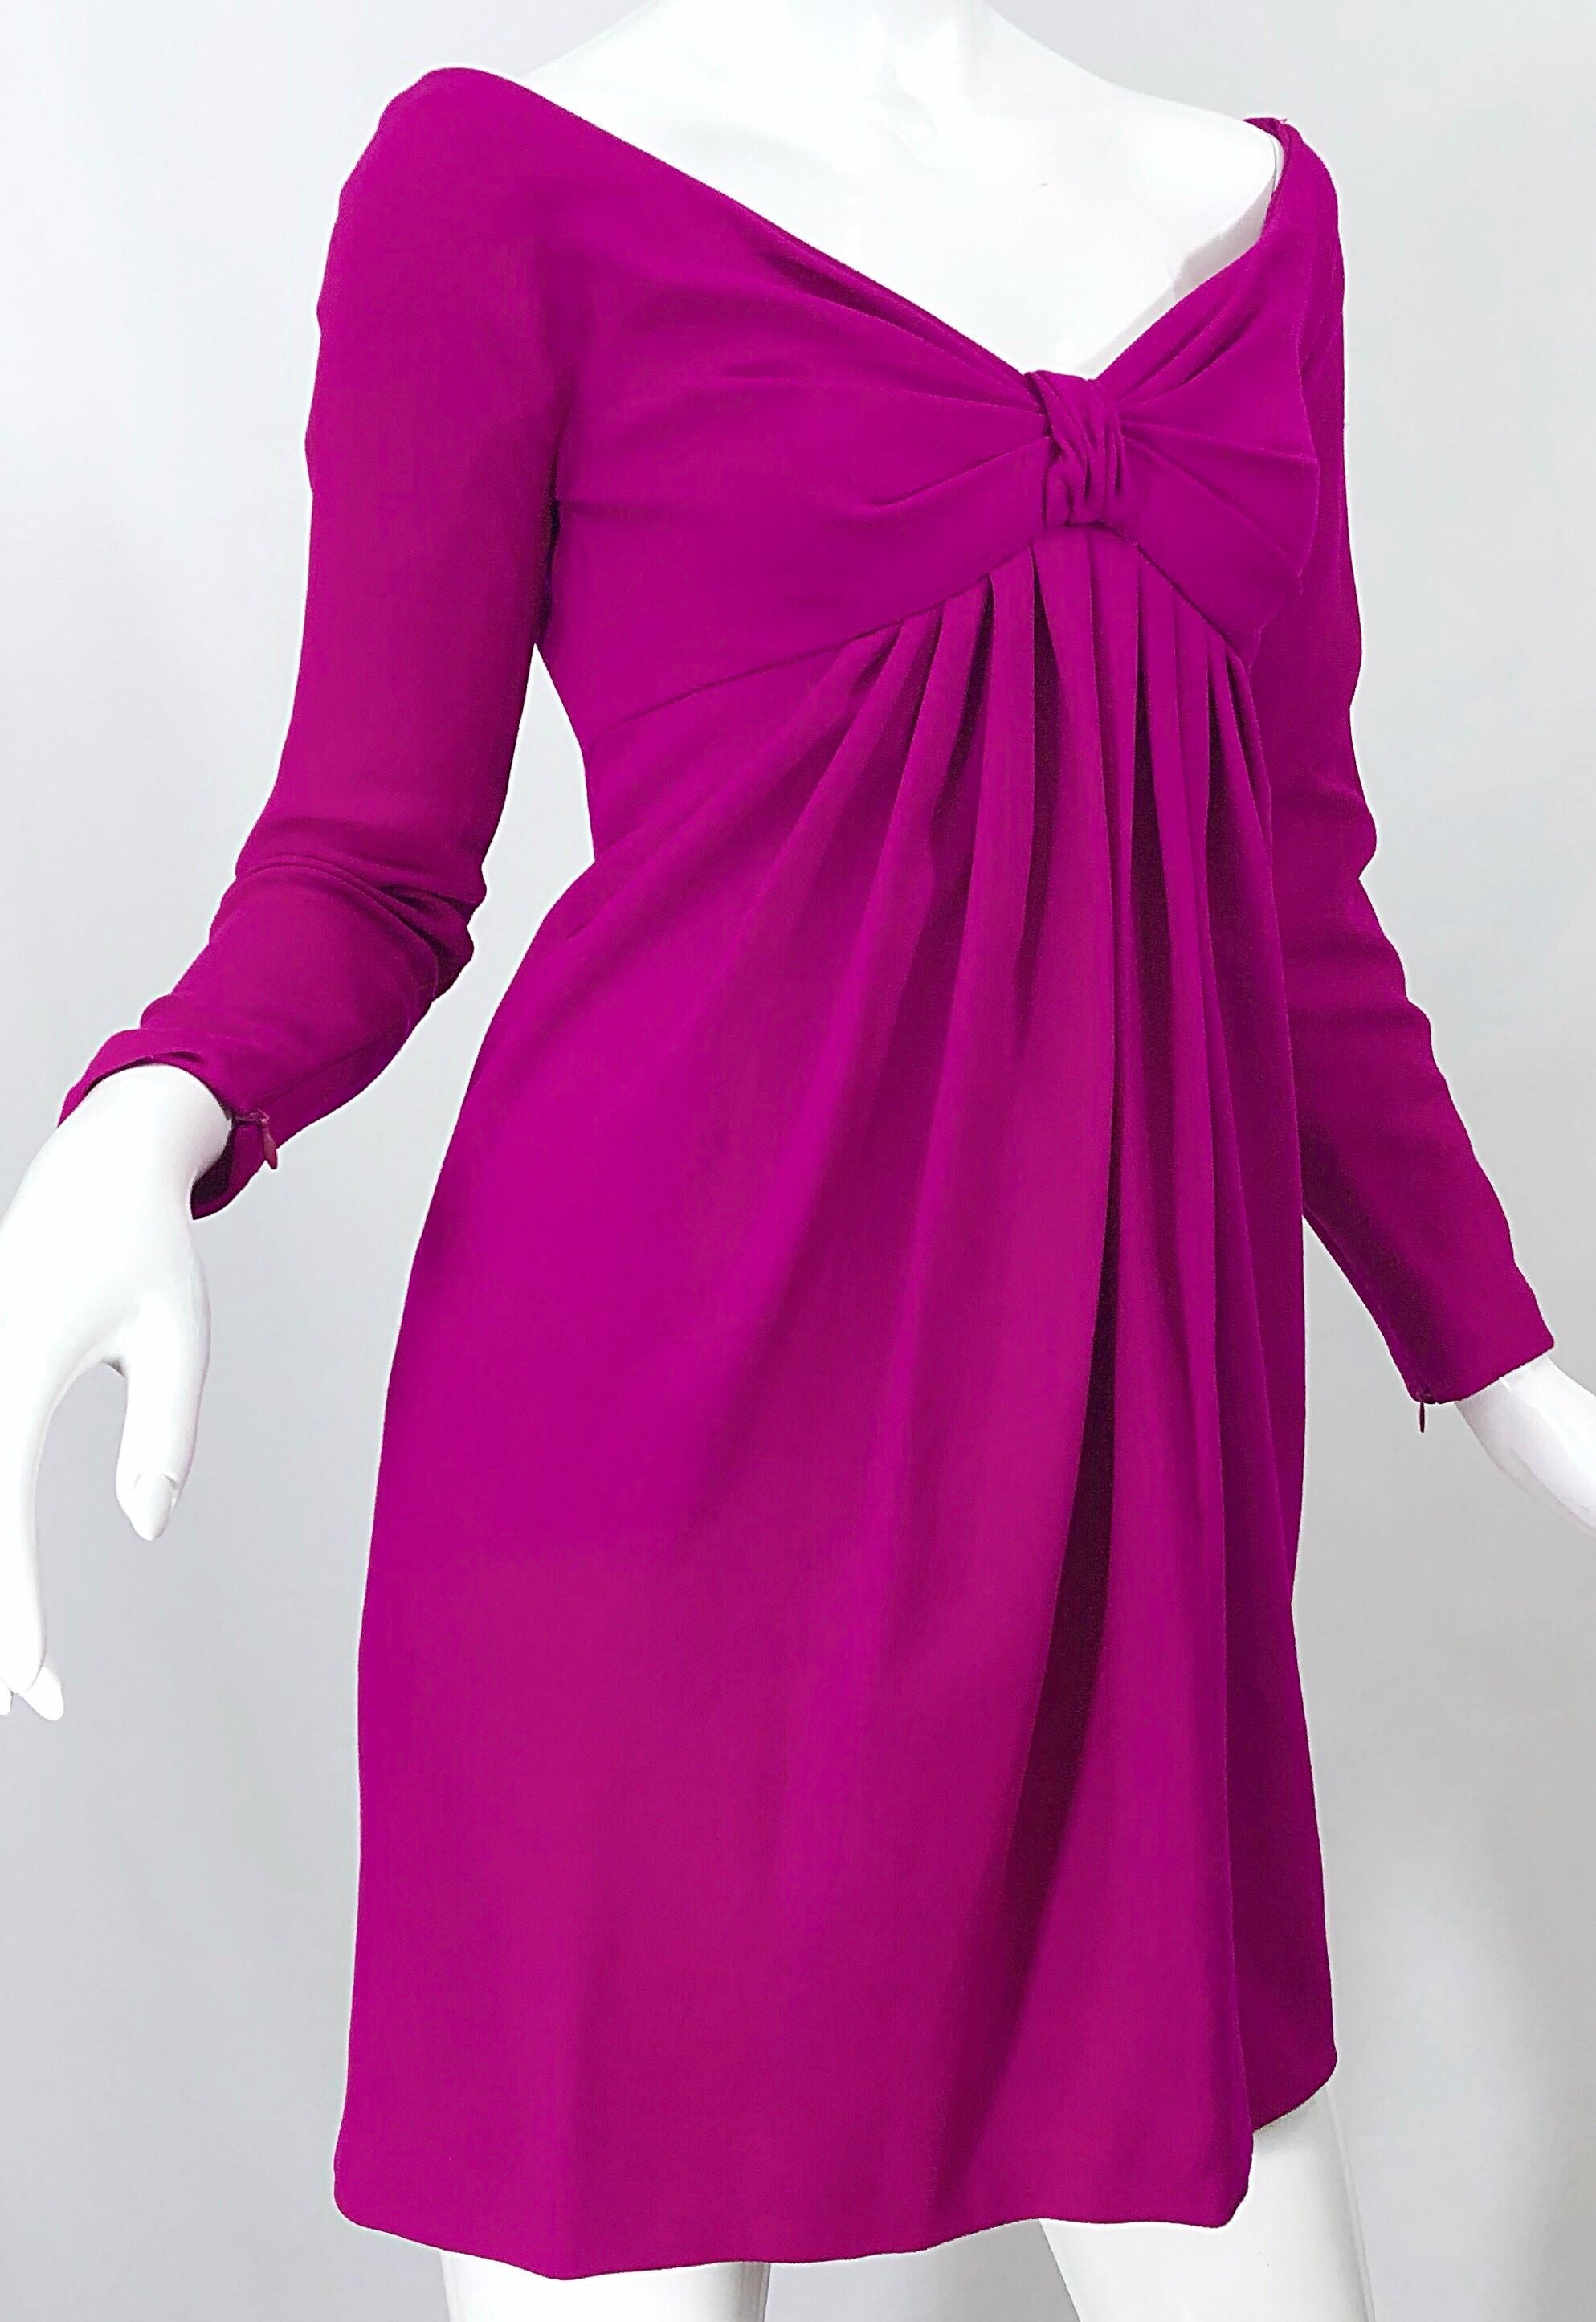 Carolyne Roehm 1990s Fuchsia Hot Pink Wool Vintage 90s Mini Empire Dress For Sale 2